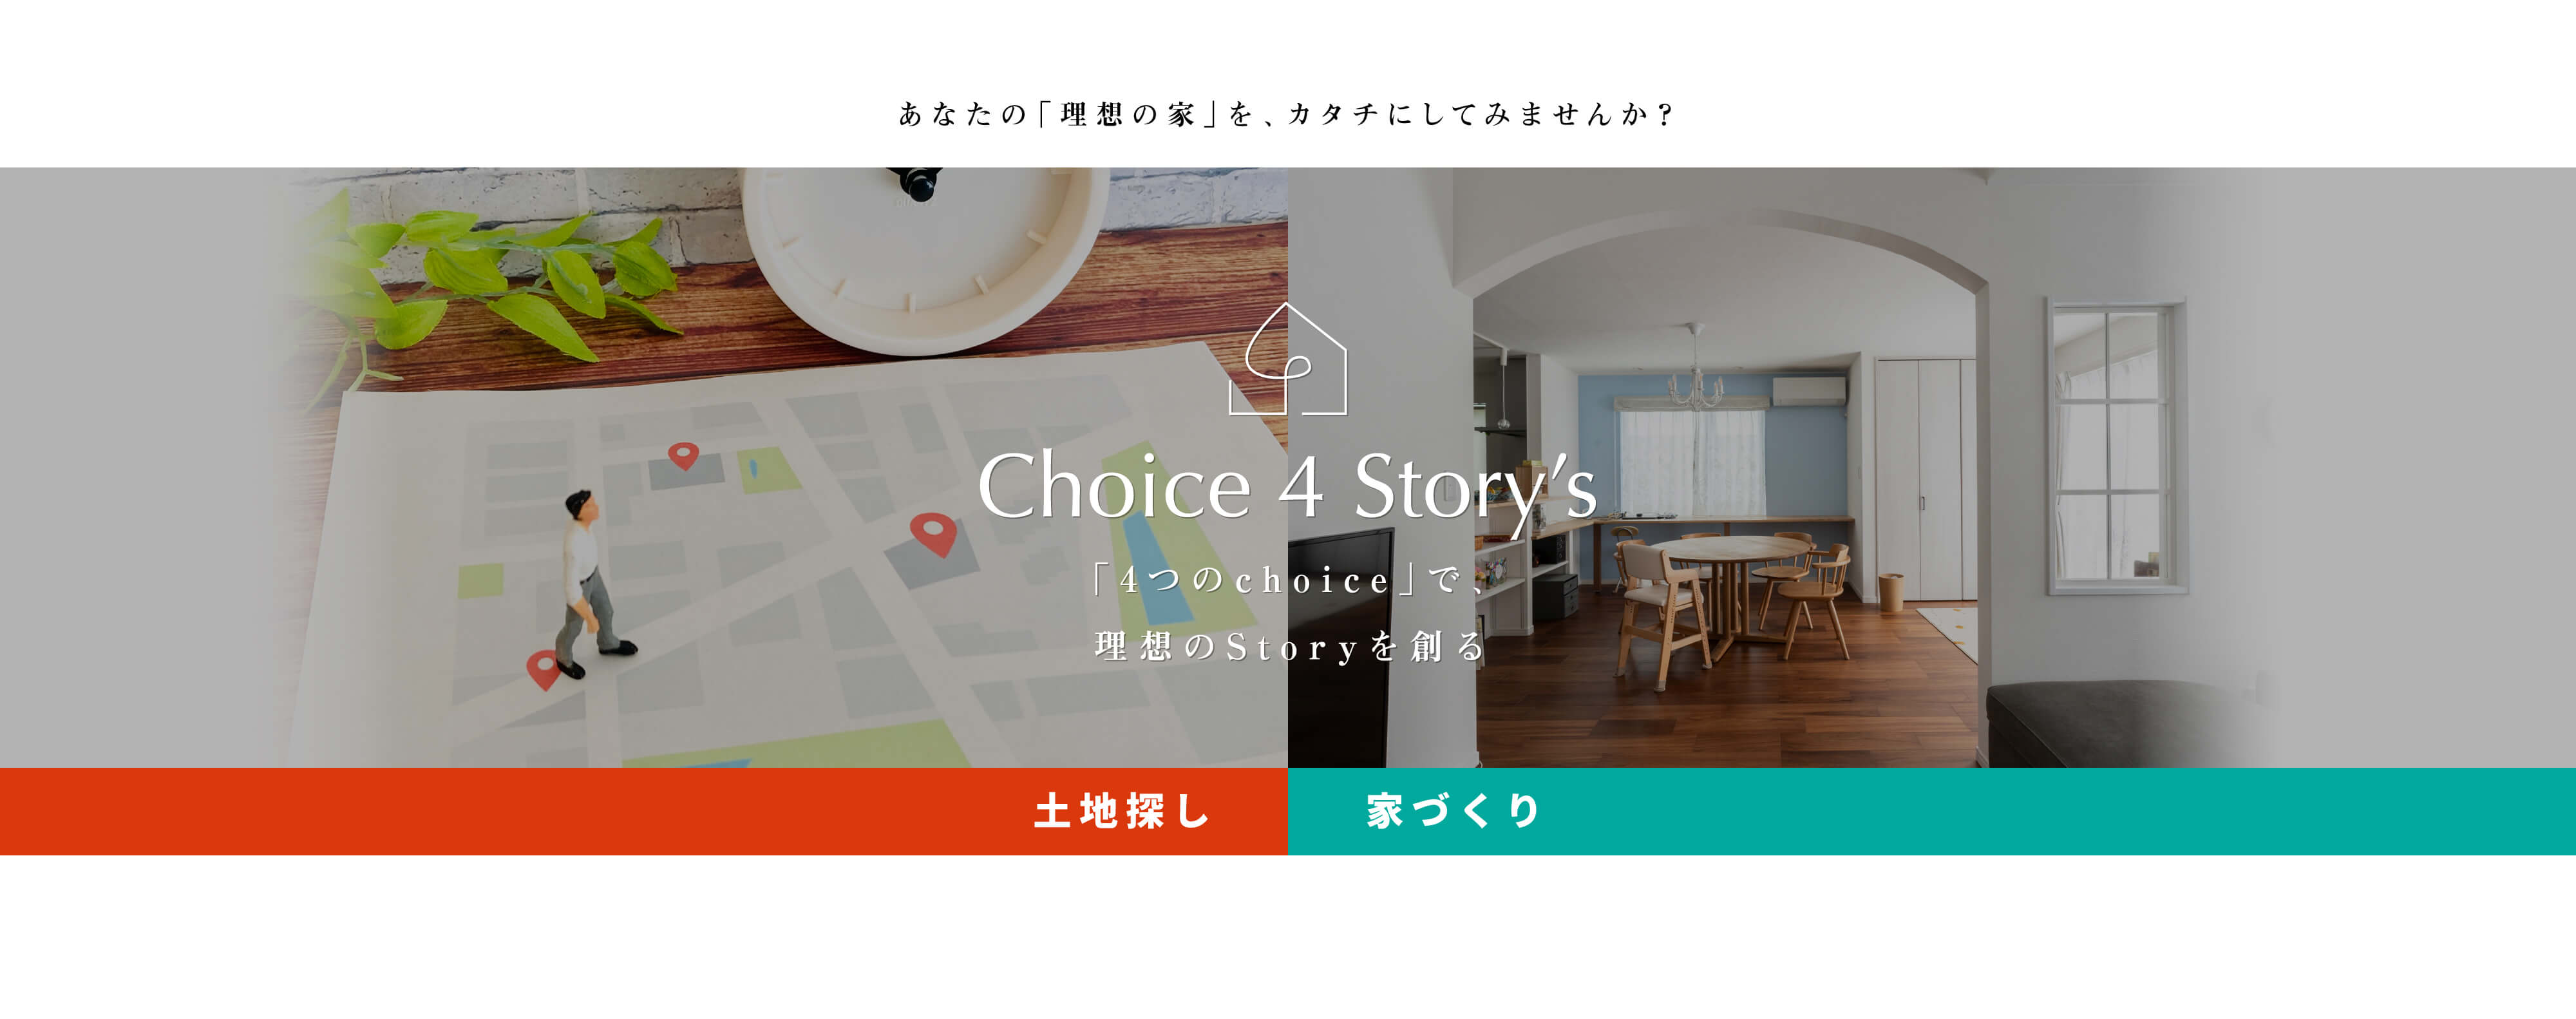 Choice 4 Story's